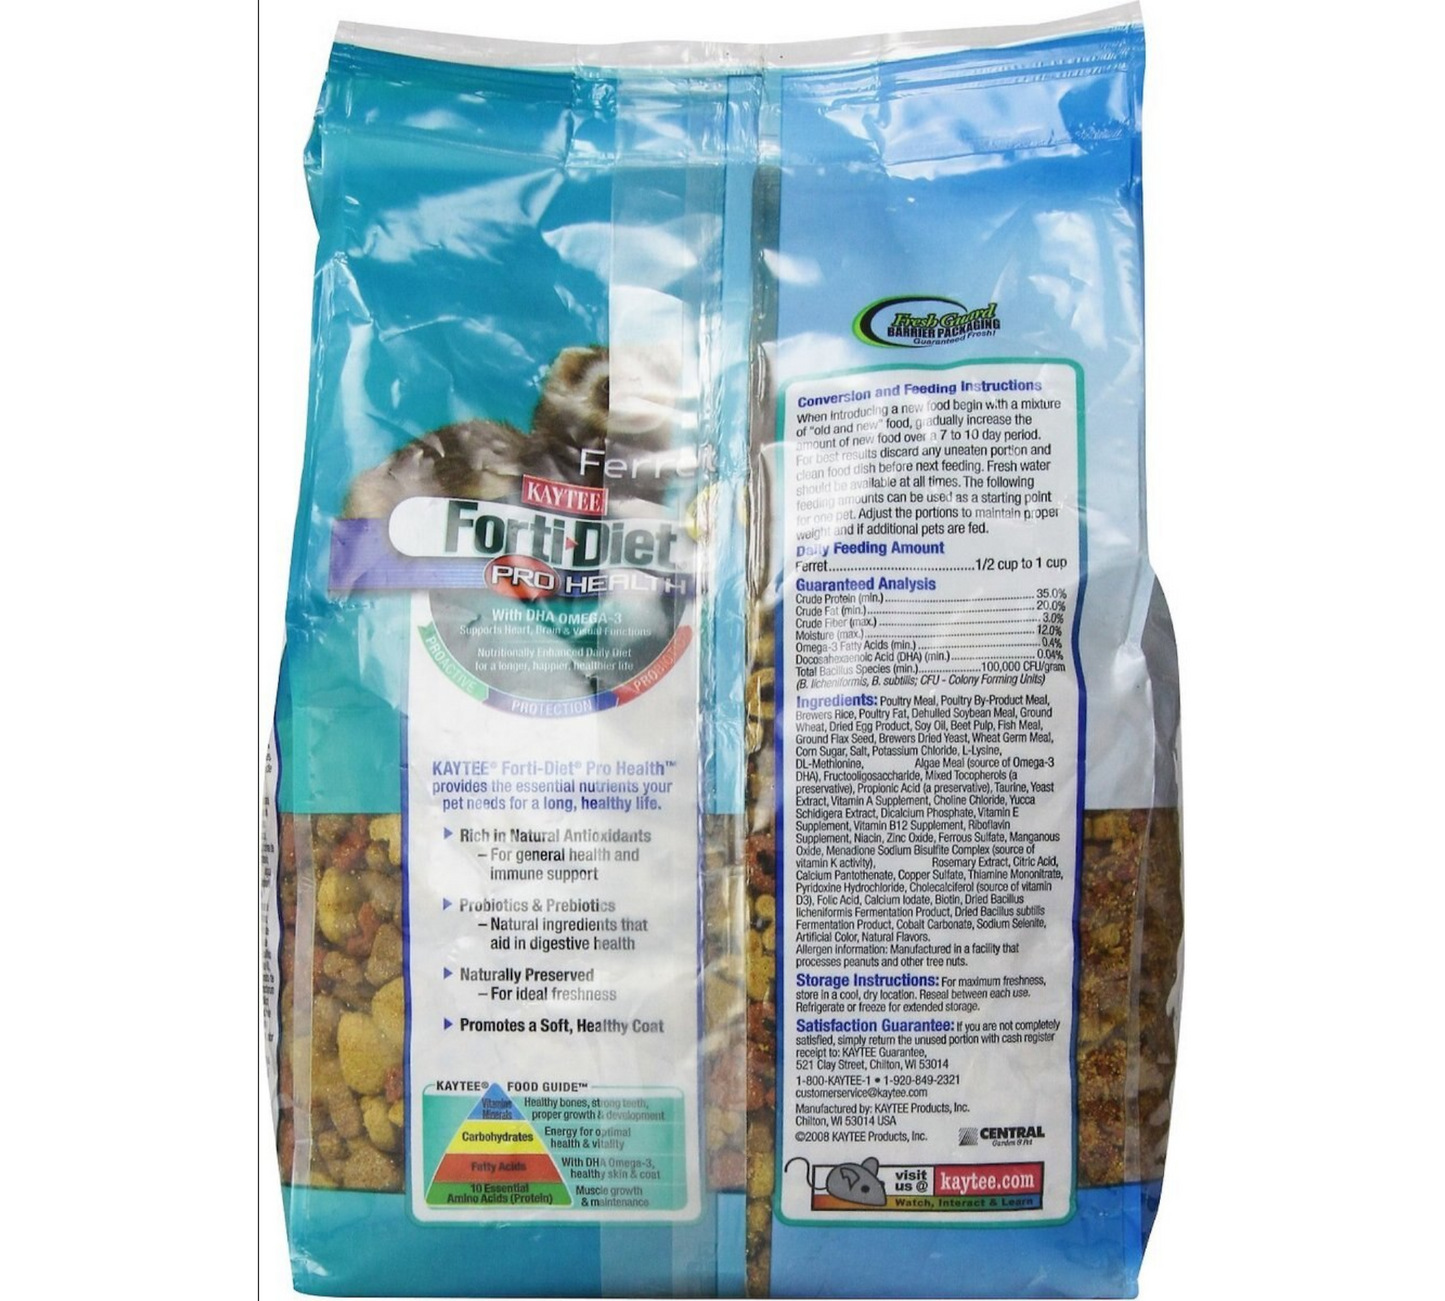 Kaytee Forti-Diet Pro Health Ferret Food, 3-lb bag